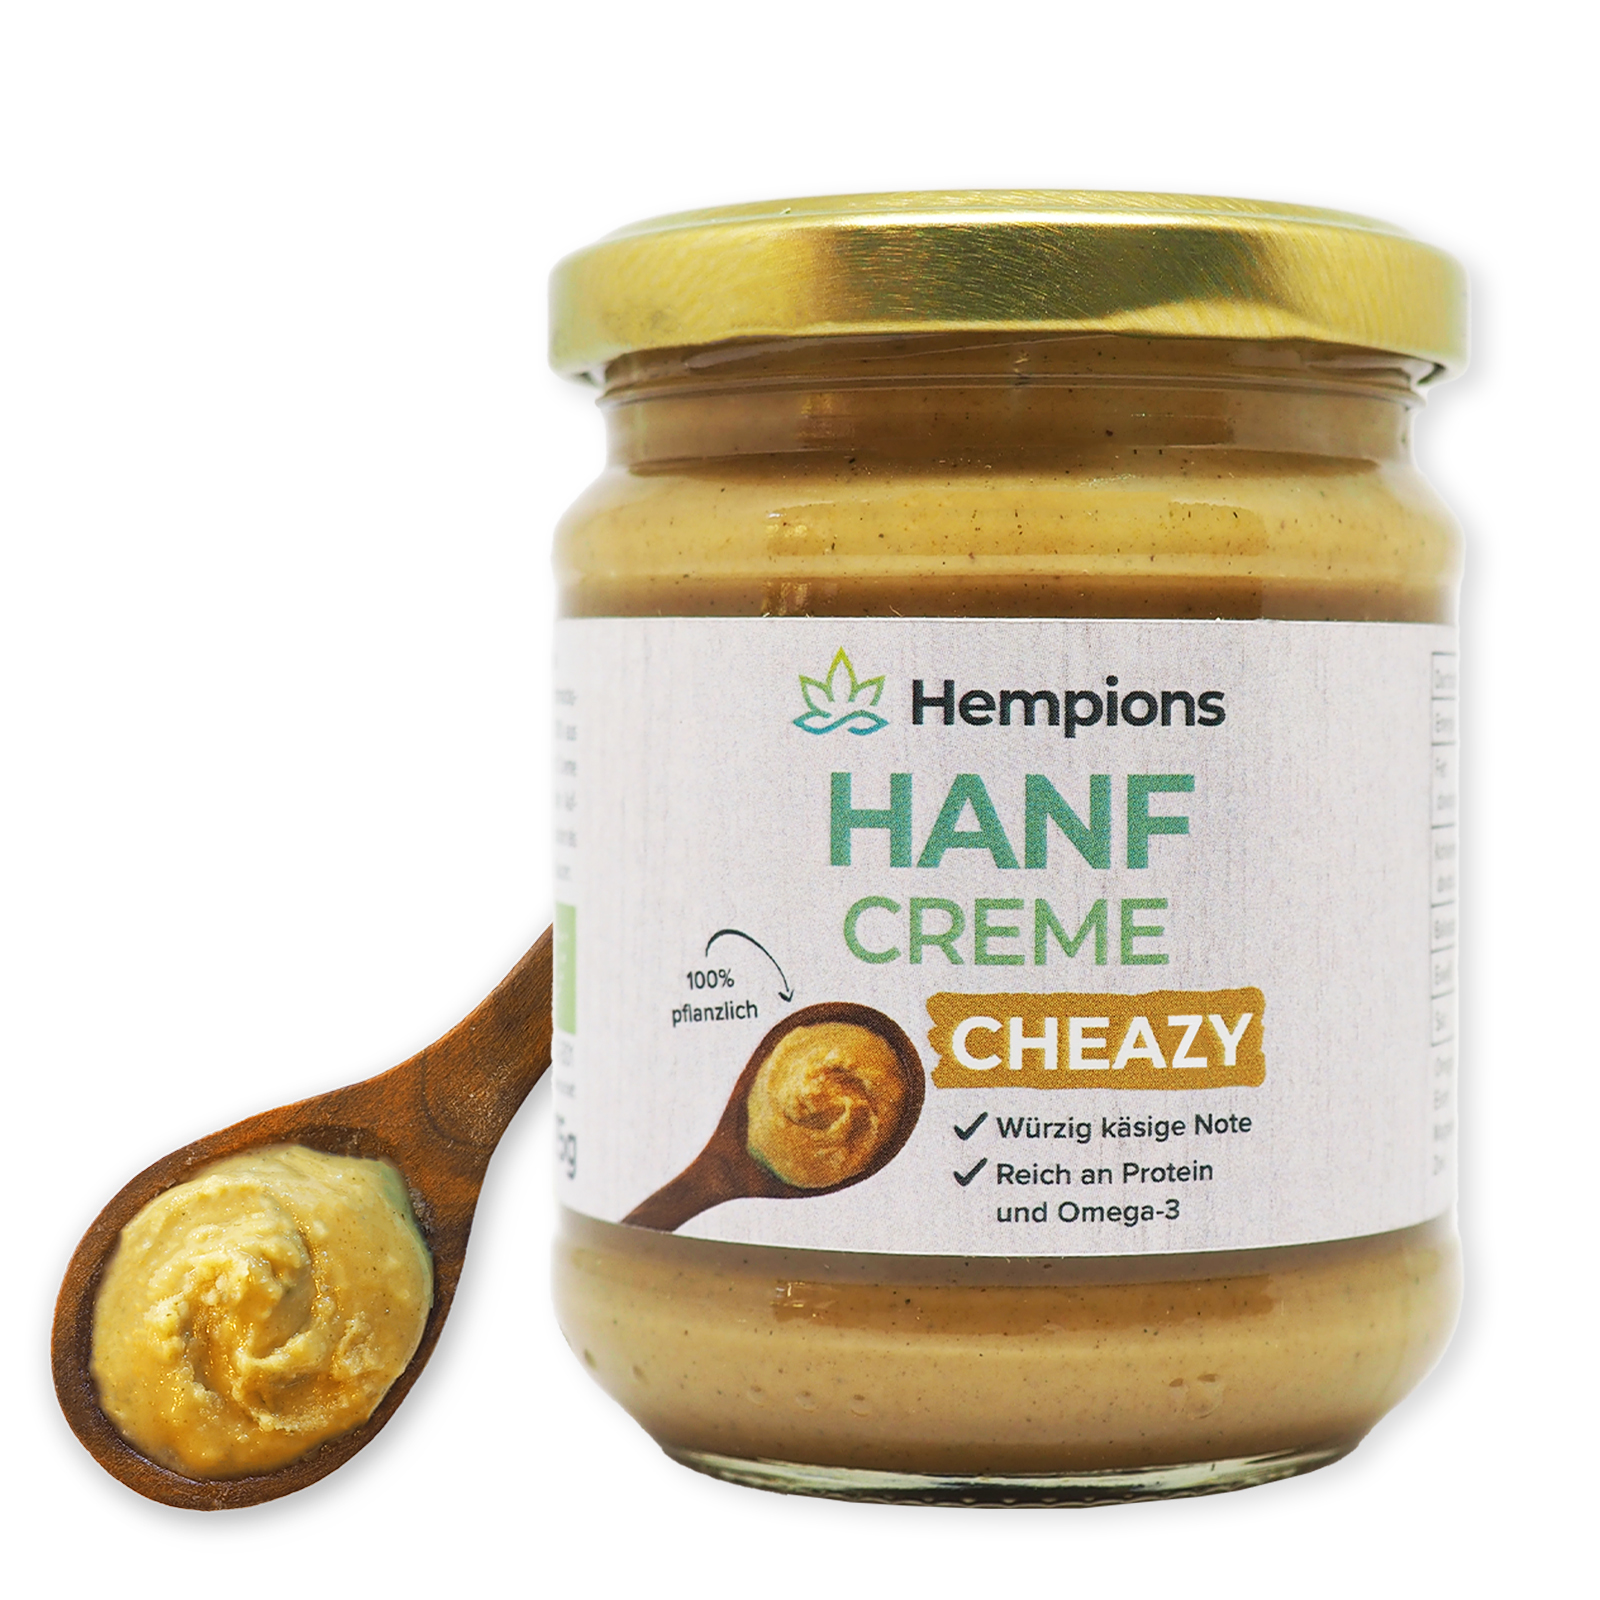 Hanf-Creme-Cheazy-175g